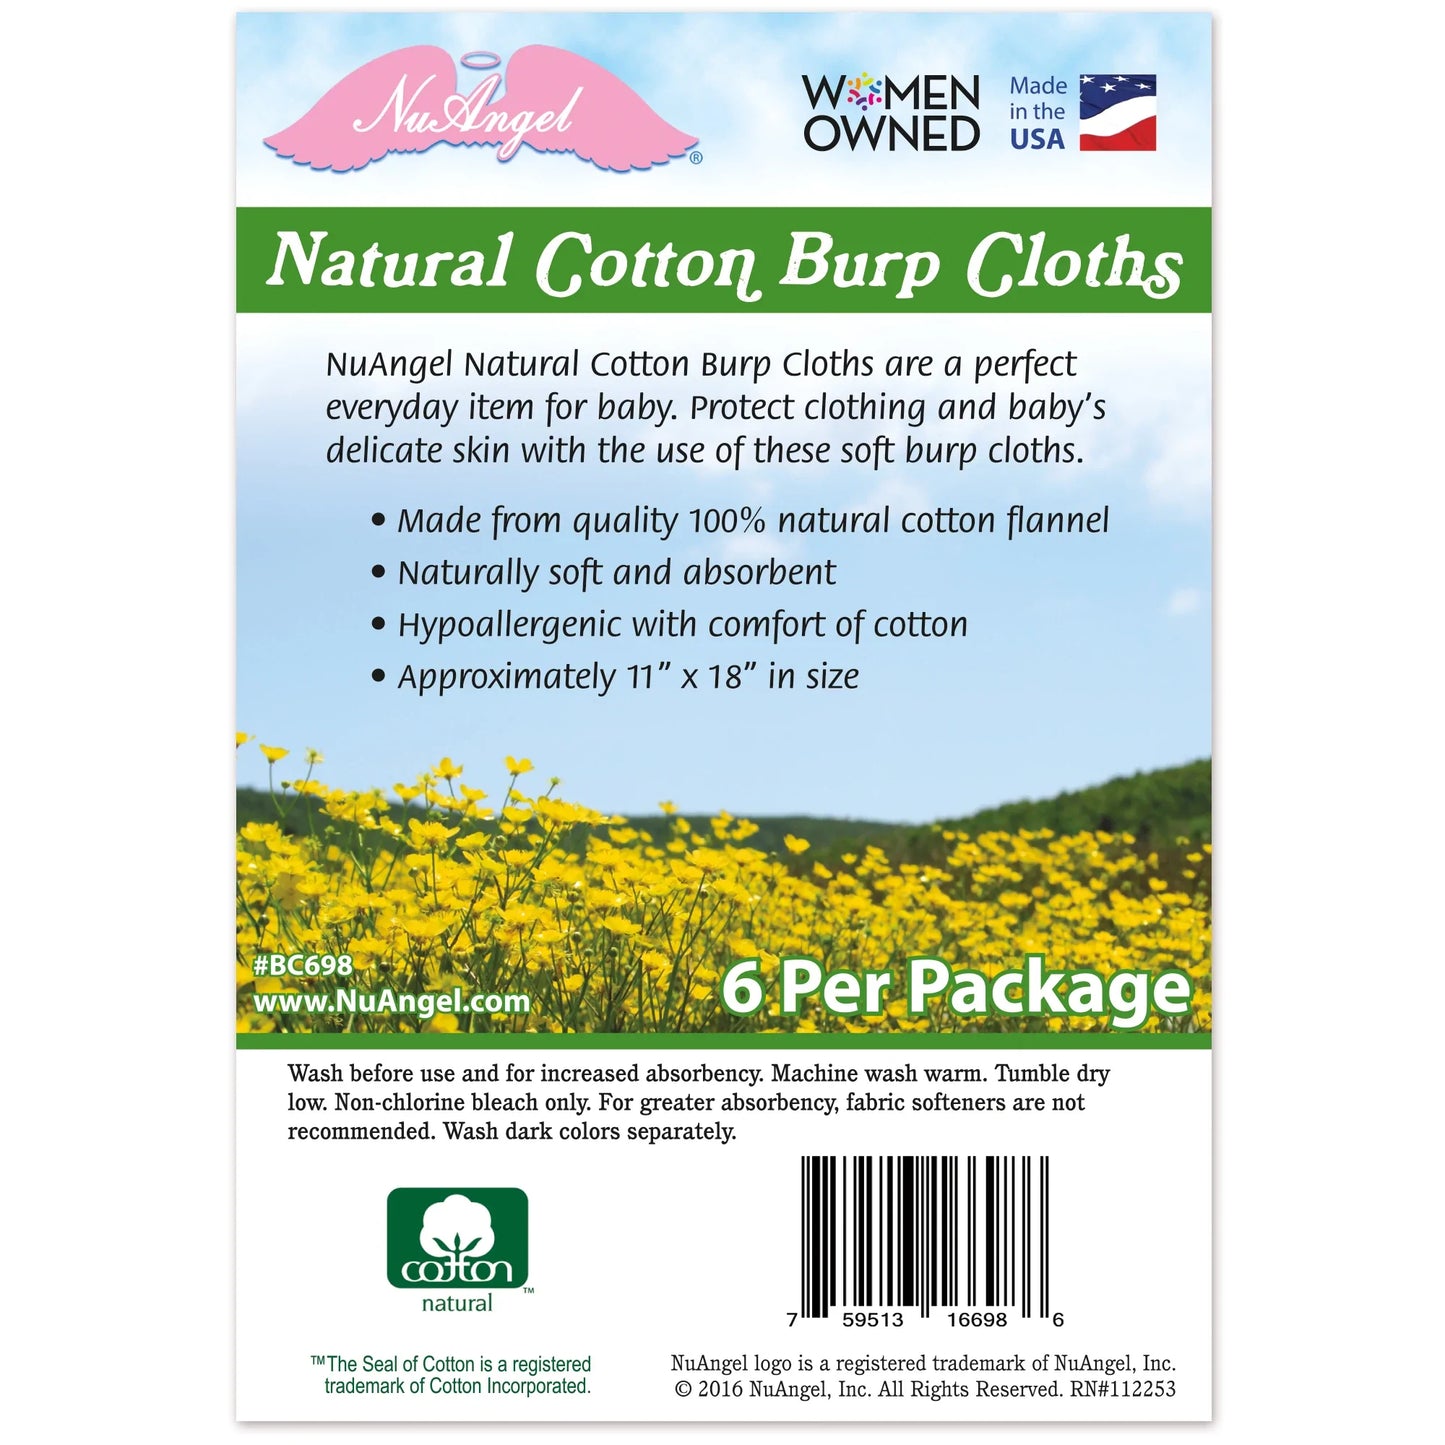 NuAngel Natural Cotton Burp Cloths Packaging